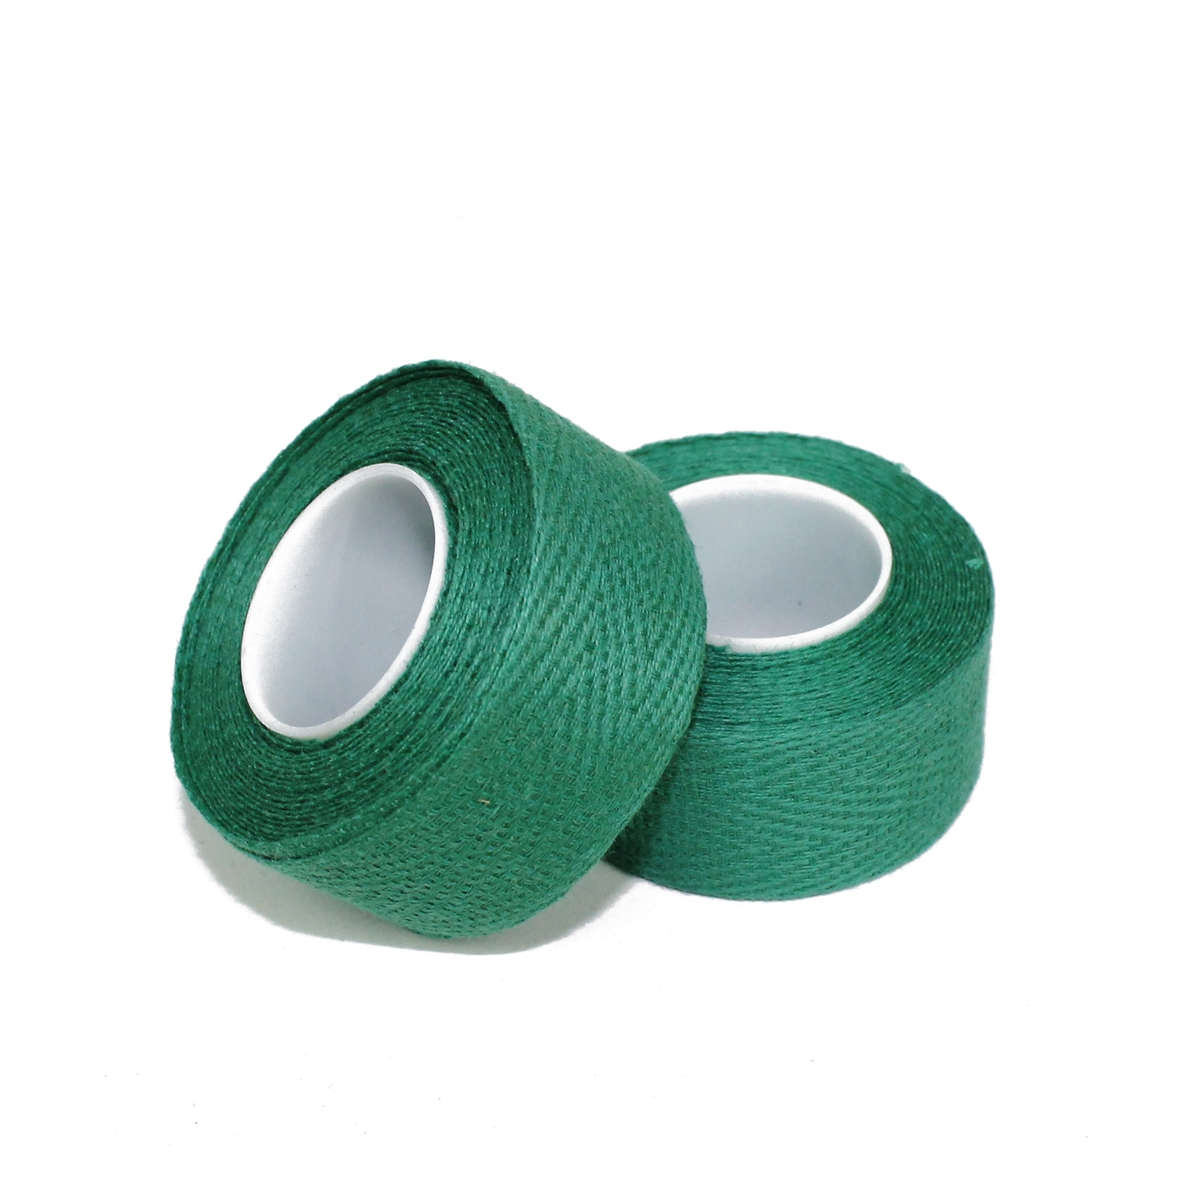 Pair cotton vintage retrò handlebar tape green